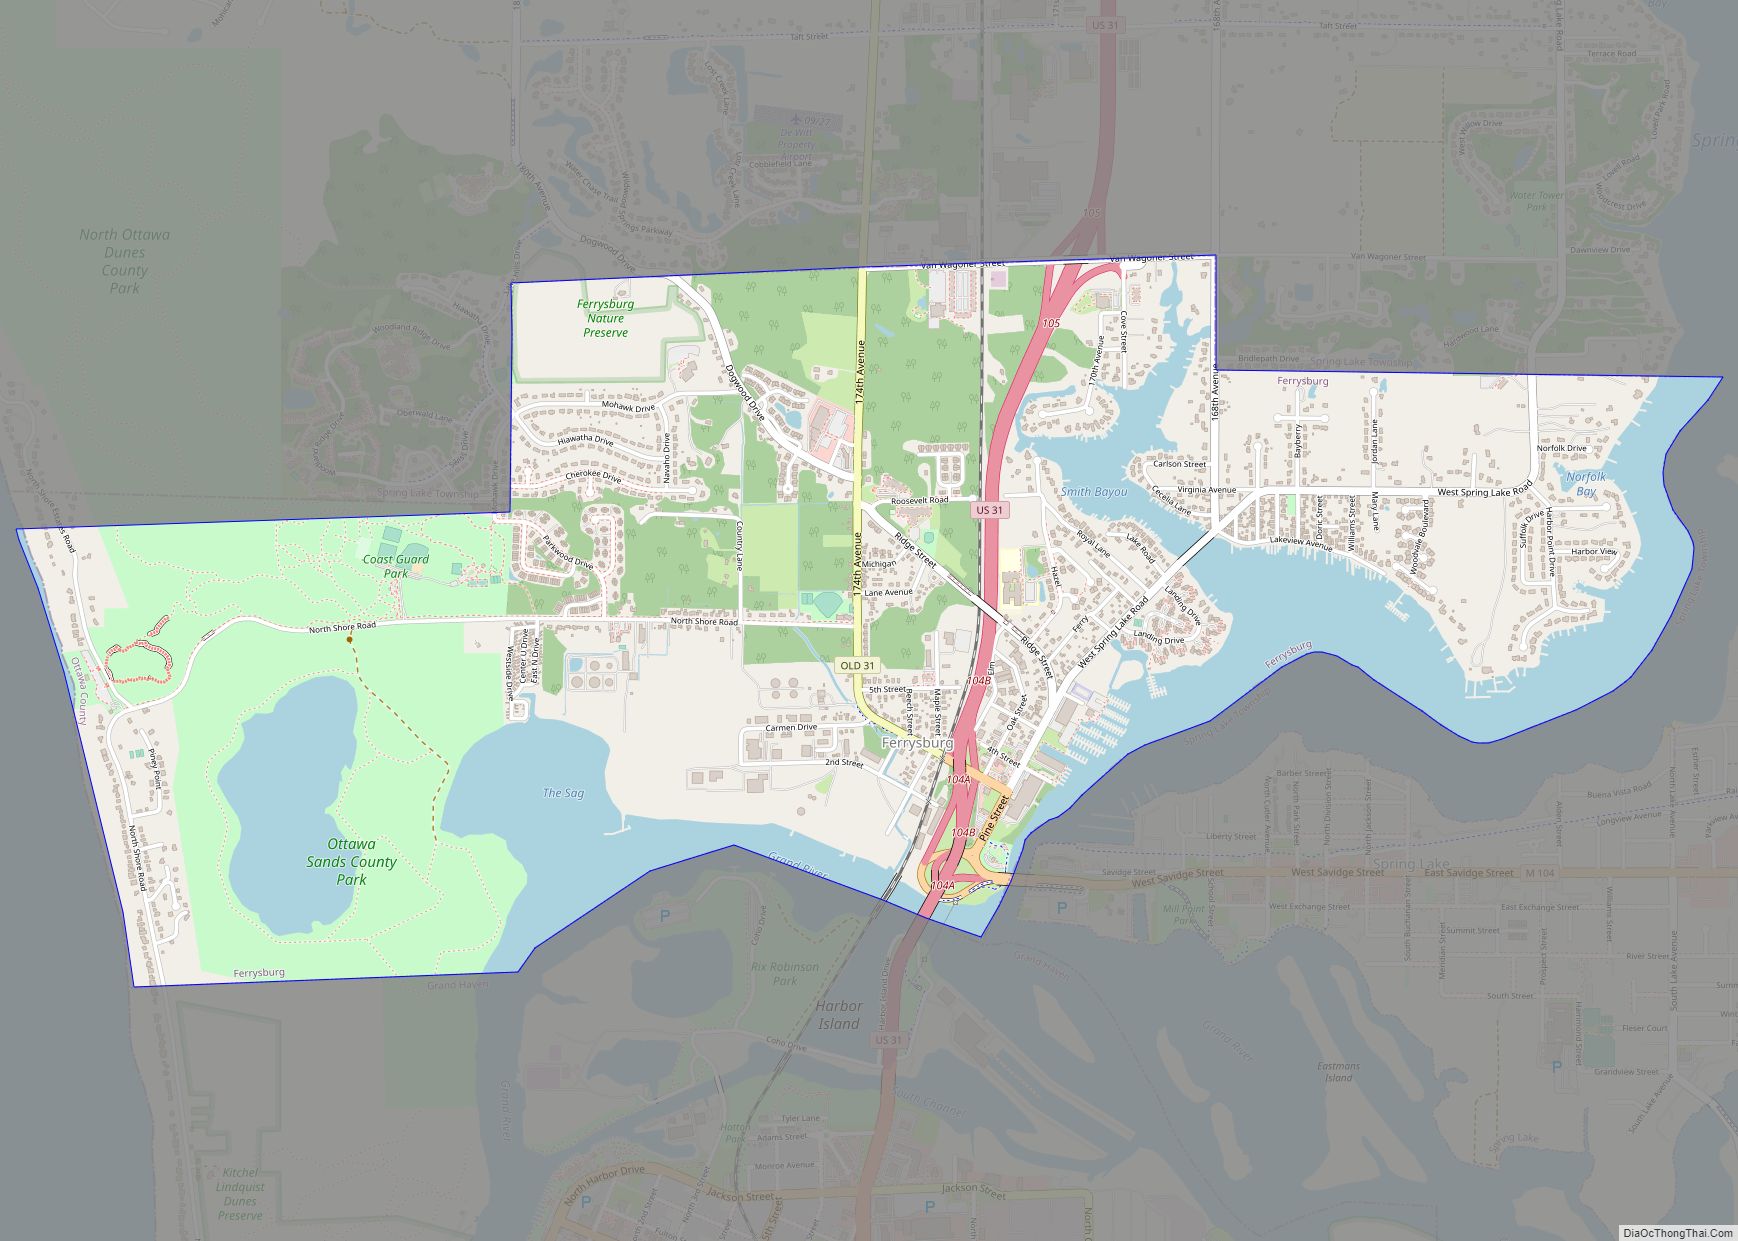 Map of Ferrysburg city